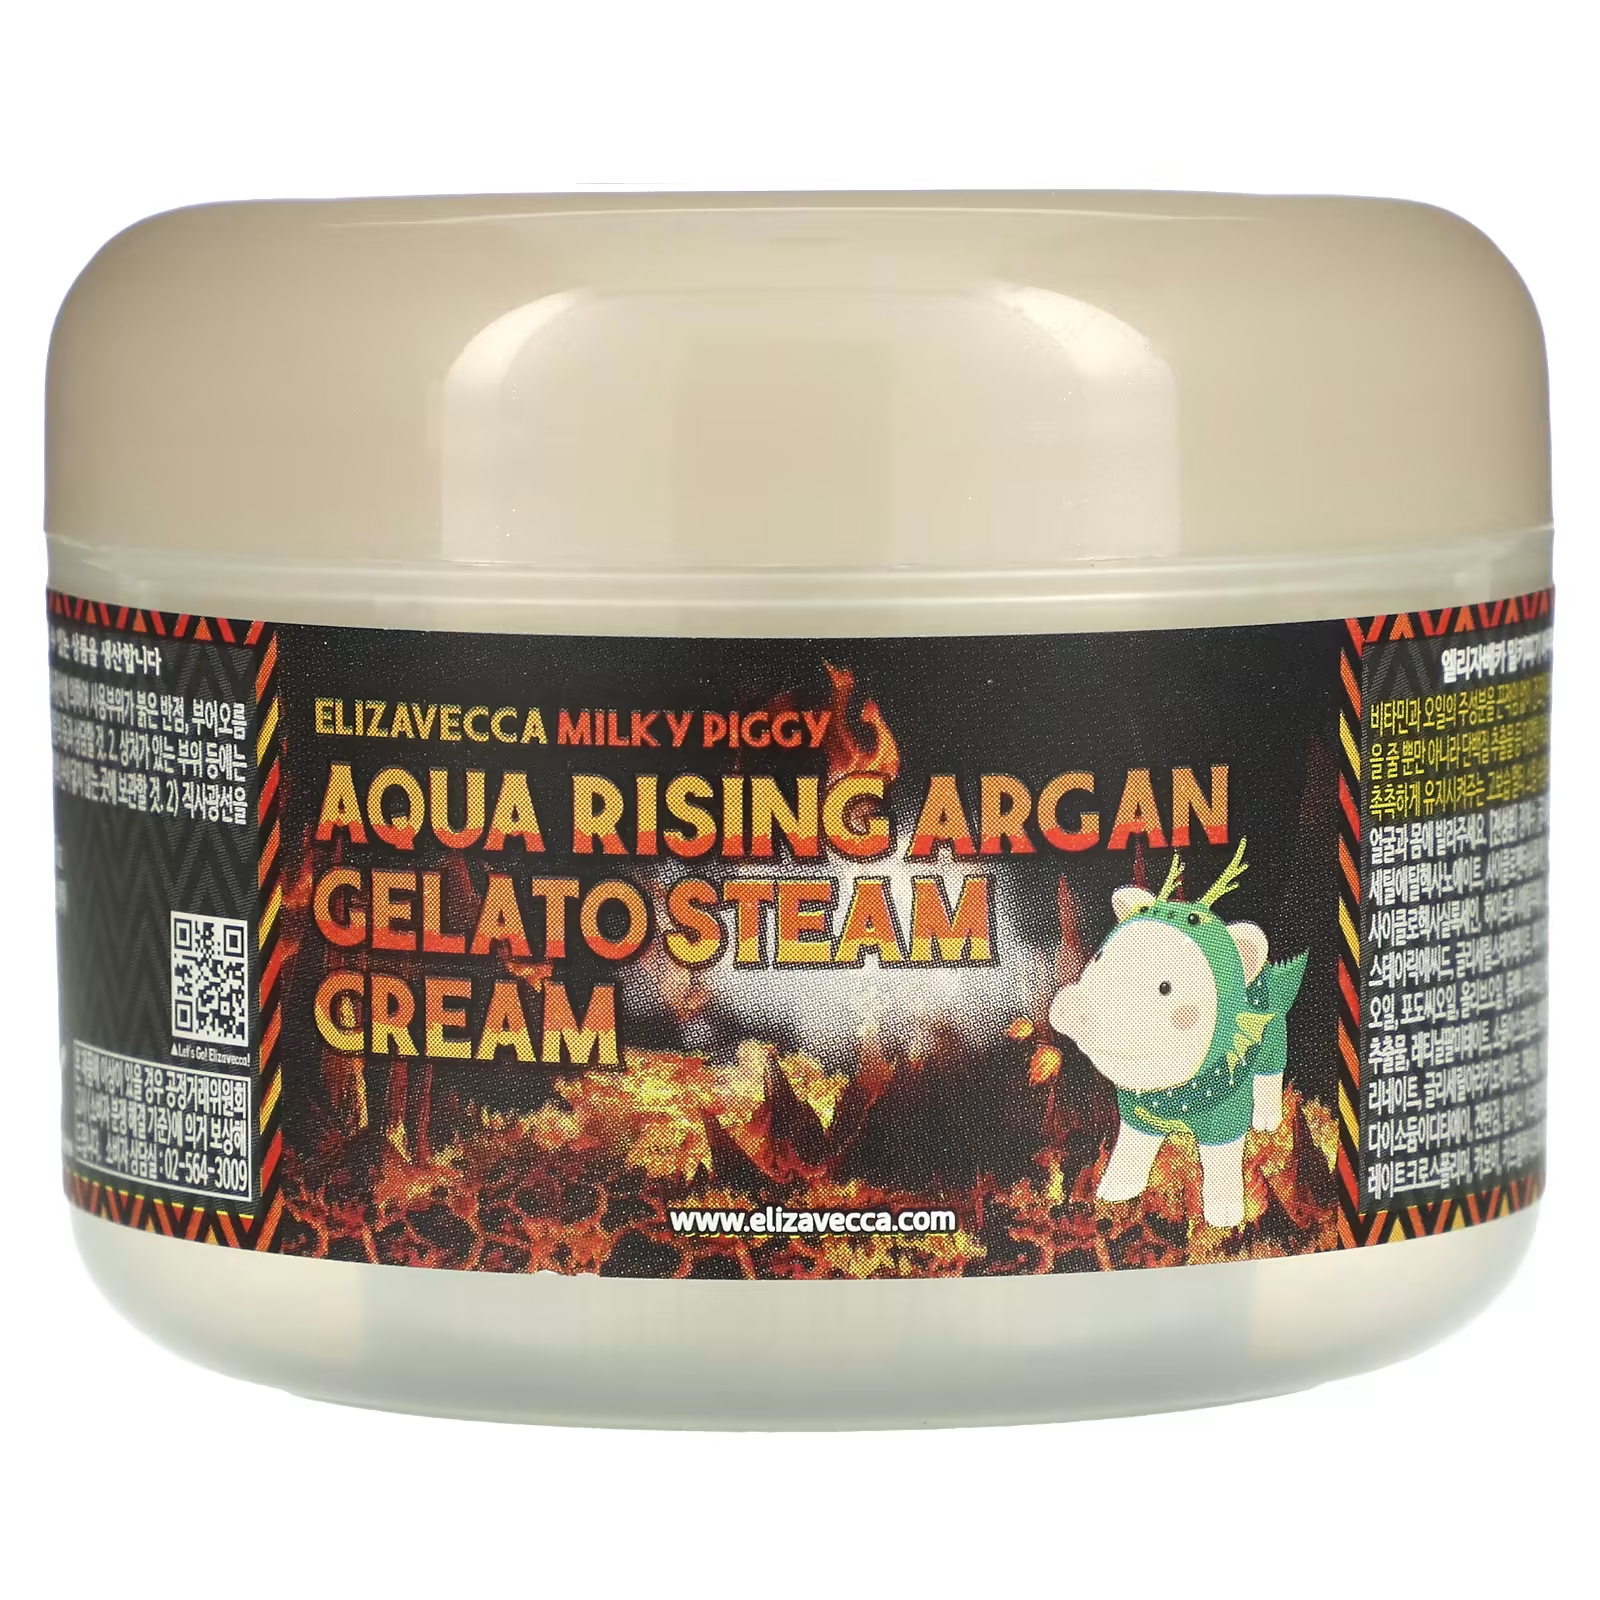 Aqua rising argan gelato steam фото 73